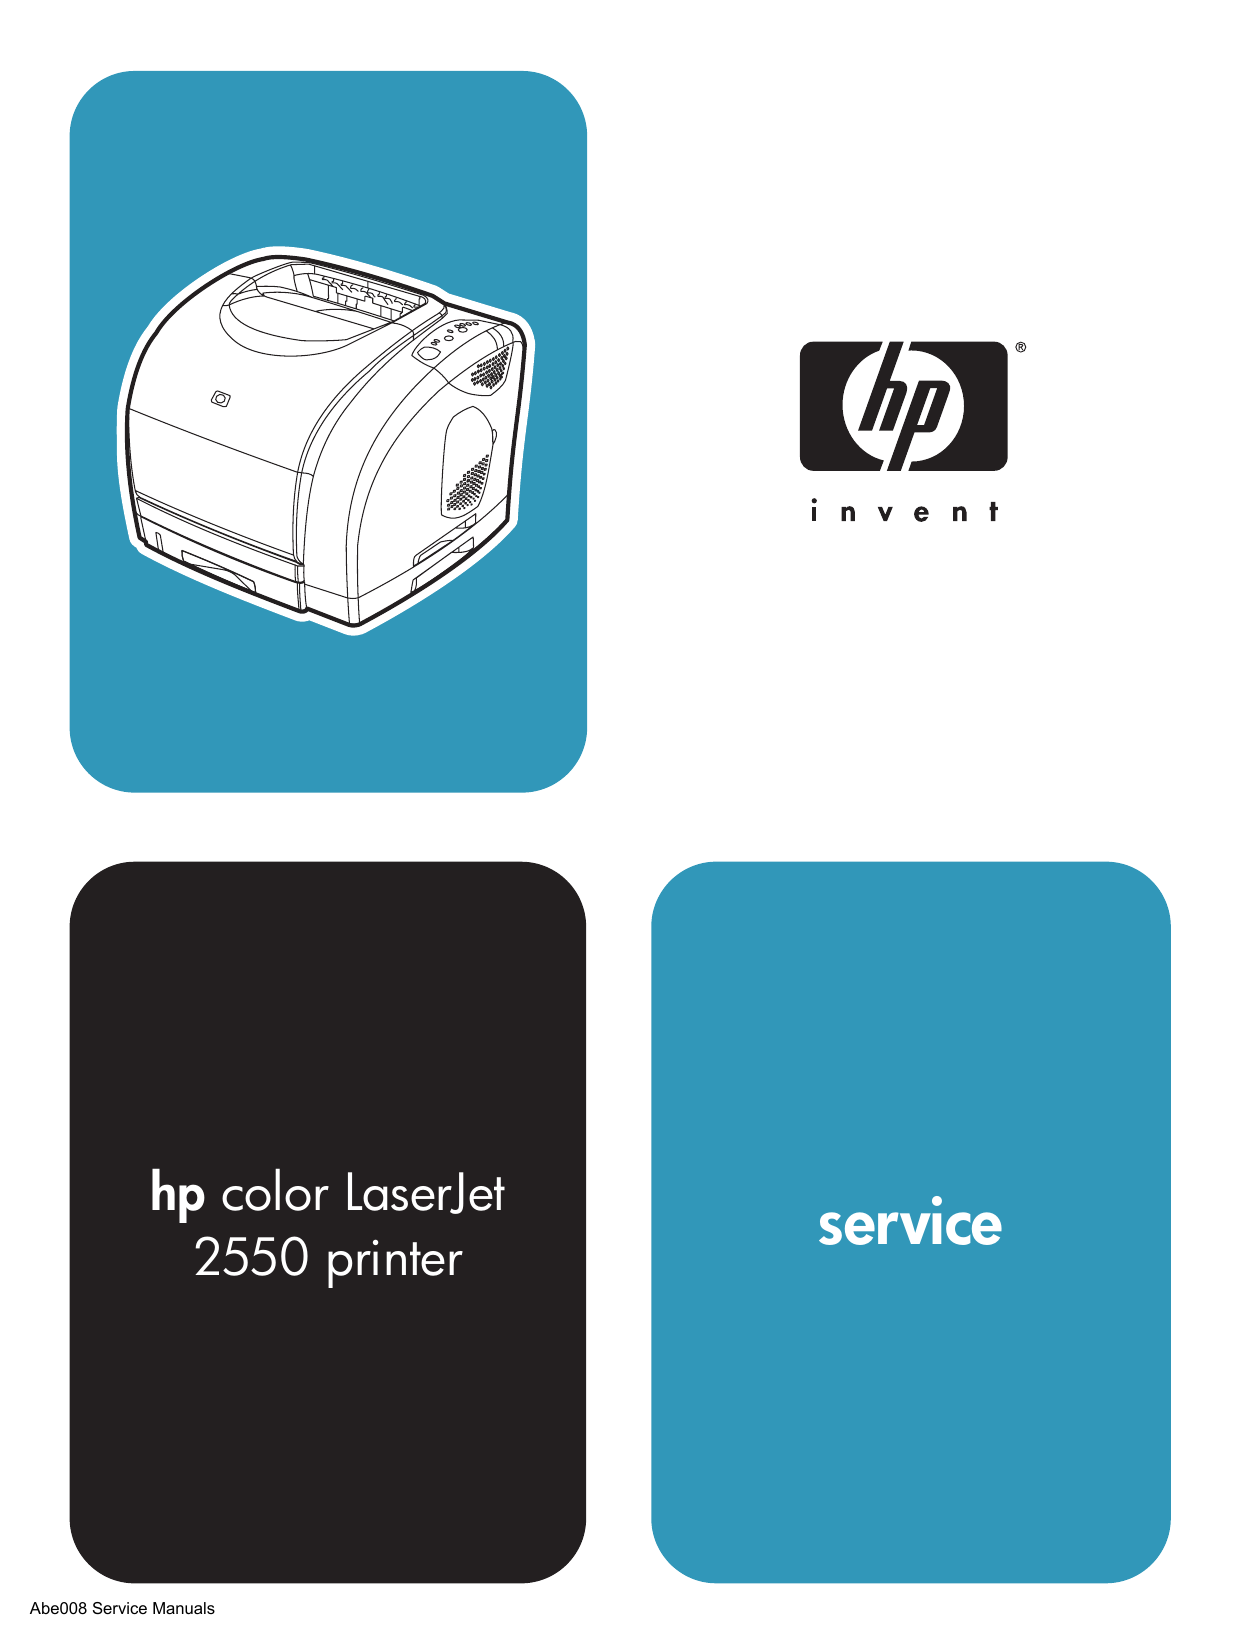 HP Laserjet 1500, 1500L, 2500, 2500 L, 2500N, 2500TN, 2550 color laser printer service manual Preview image 1